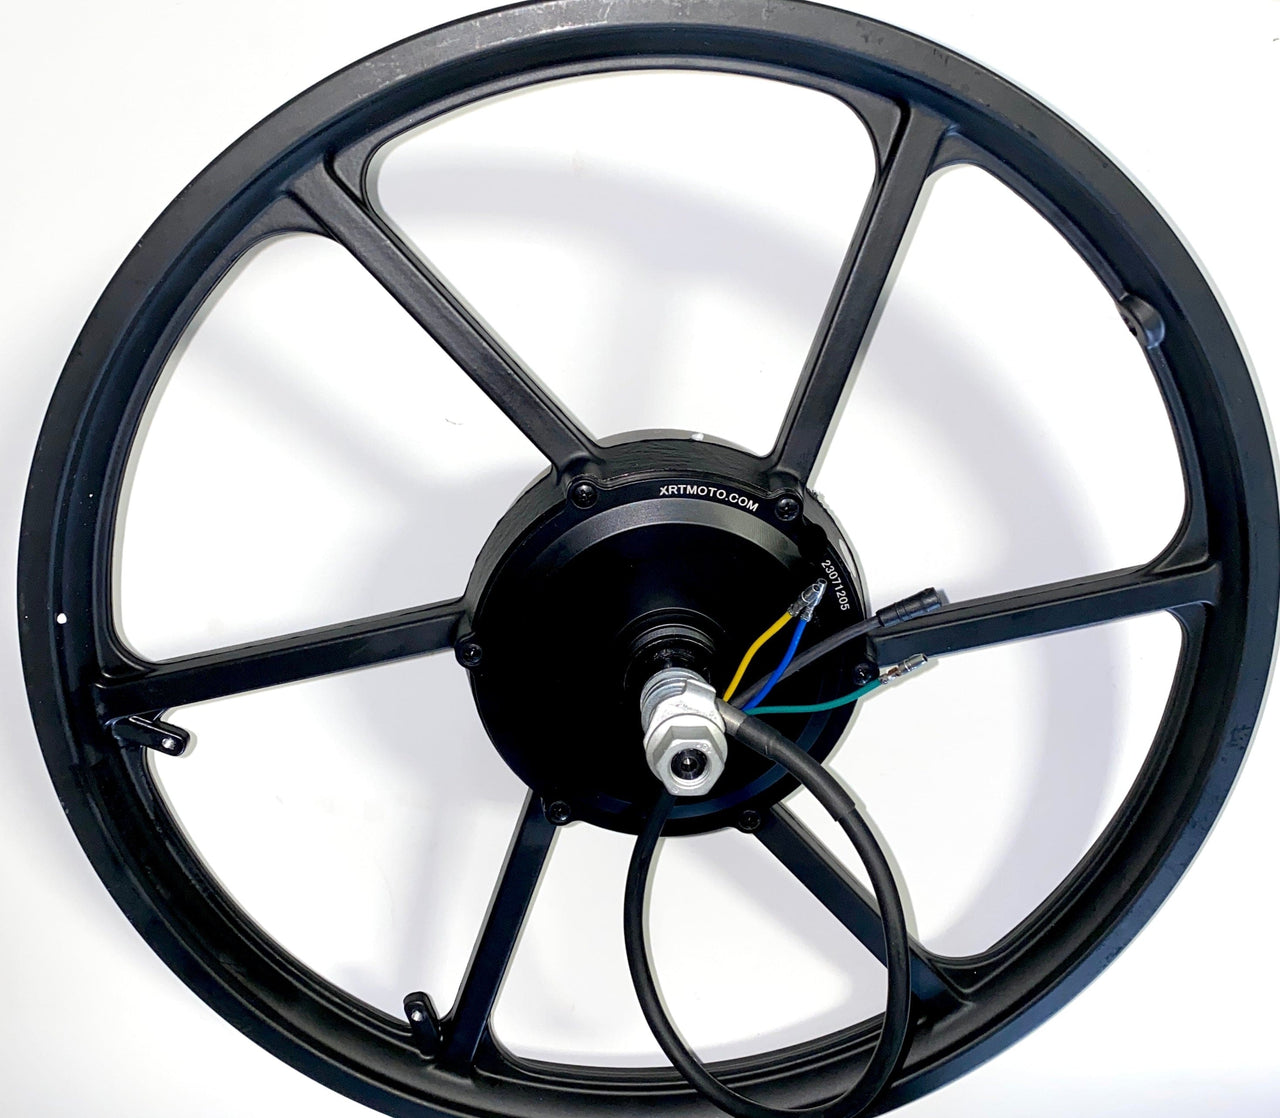 20" Rear Wheel, 36v/350W Hub Motor Assembly | P20-212